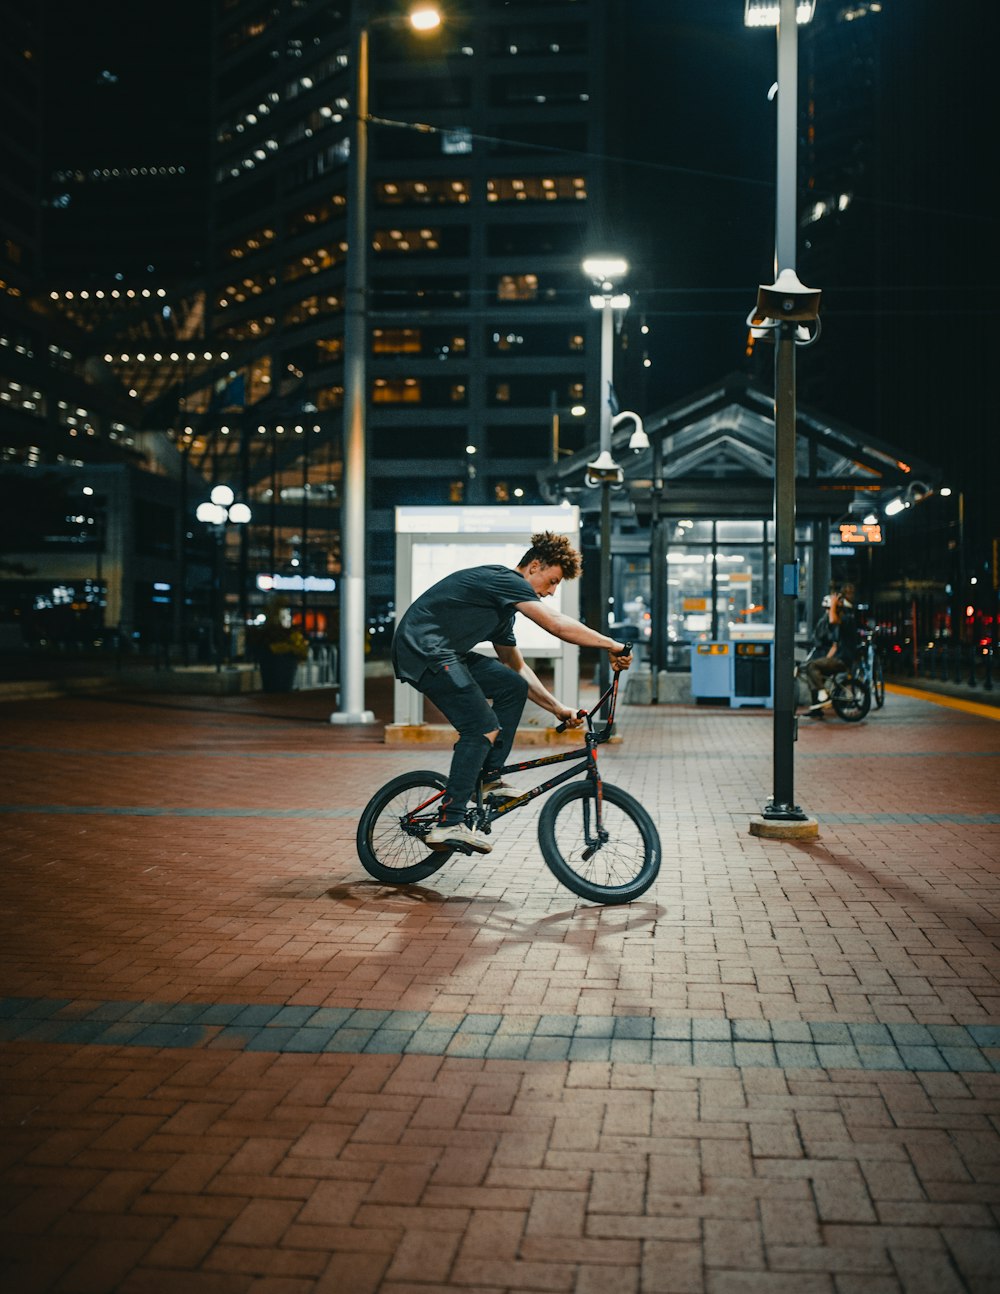 A boy on his BMX bike in an empty street